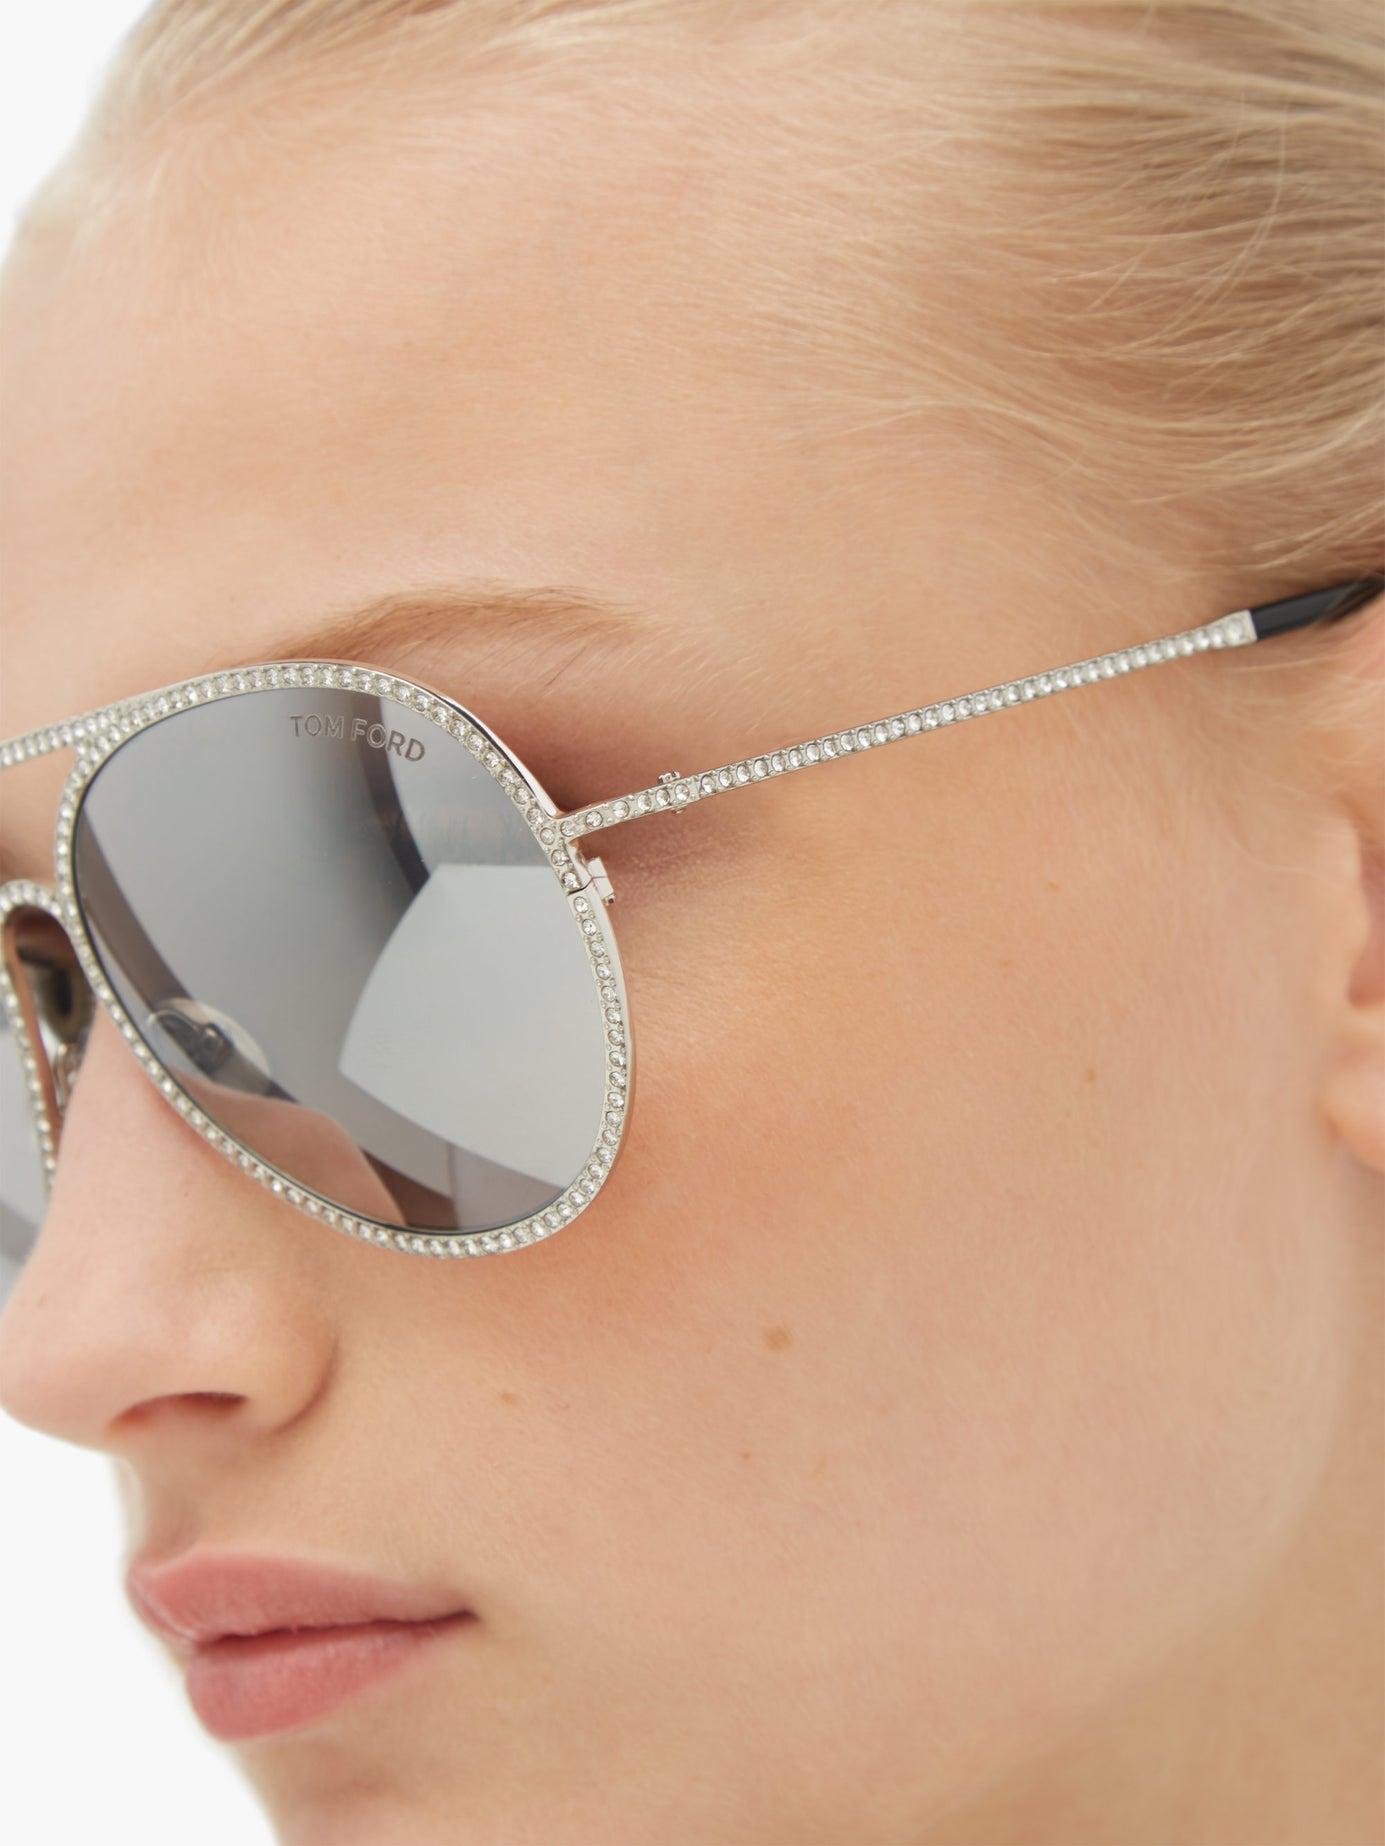 Tom Ford Crystal Embellished Aviator Sunglasses in Metallic